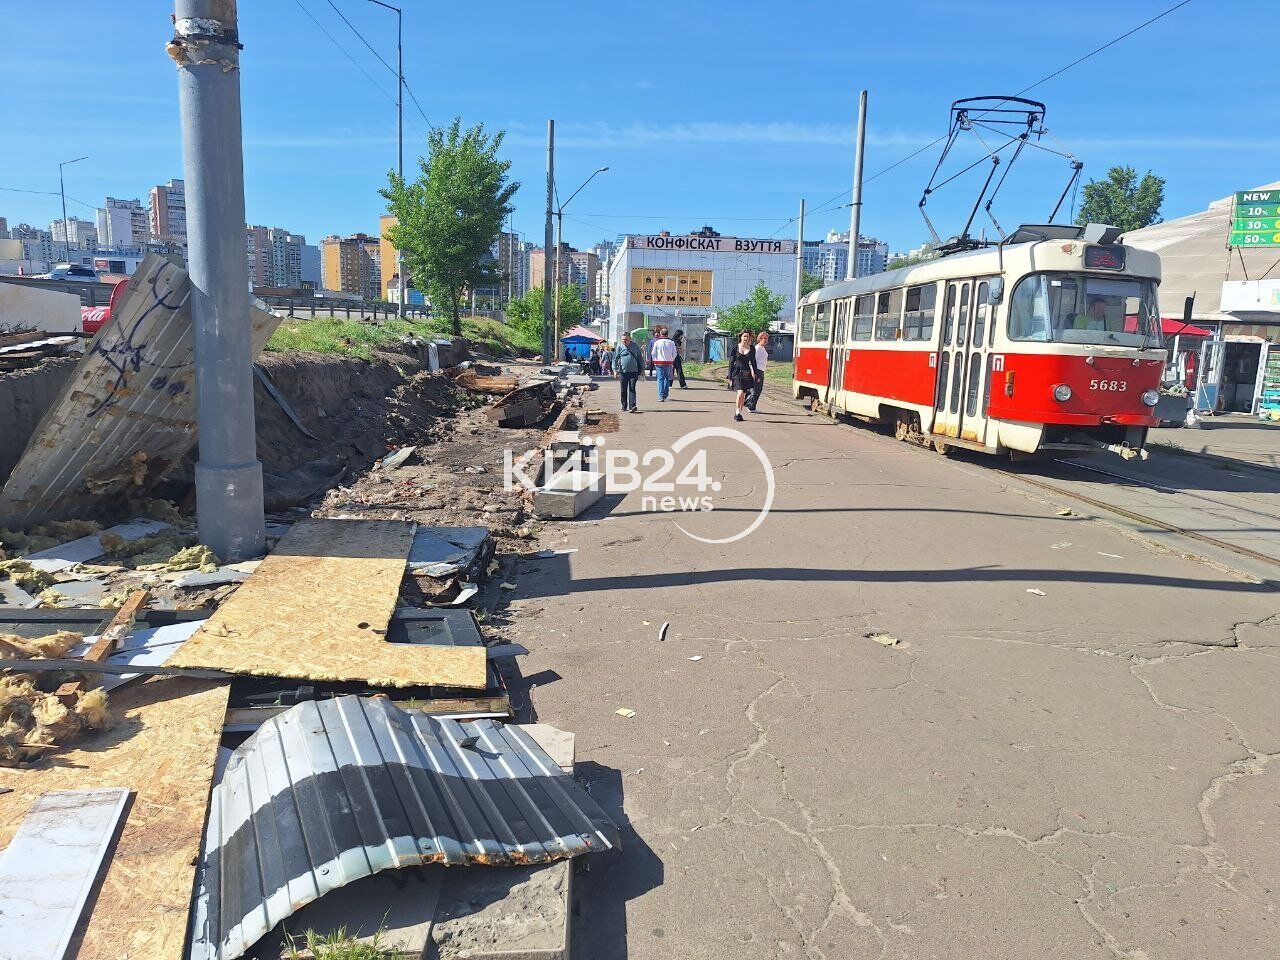 Из-за ДТП с пострадавшим: в Киеве на Позняках начали демонтаж МАФов на остановке трамваев. Фото